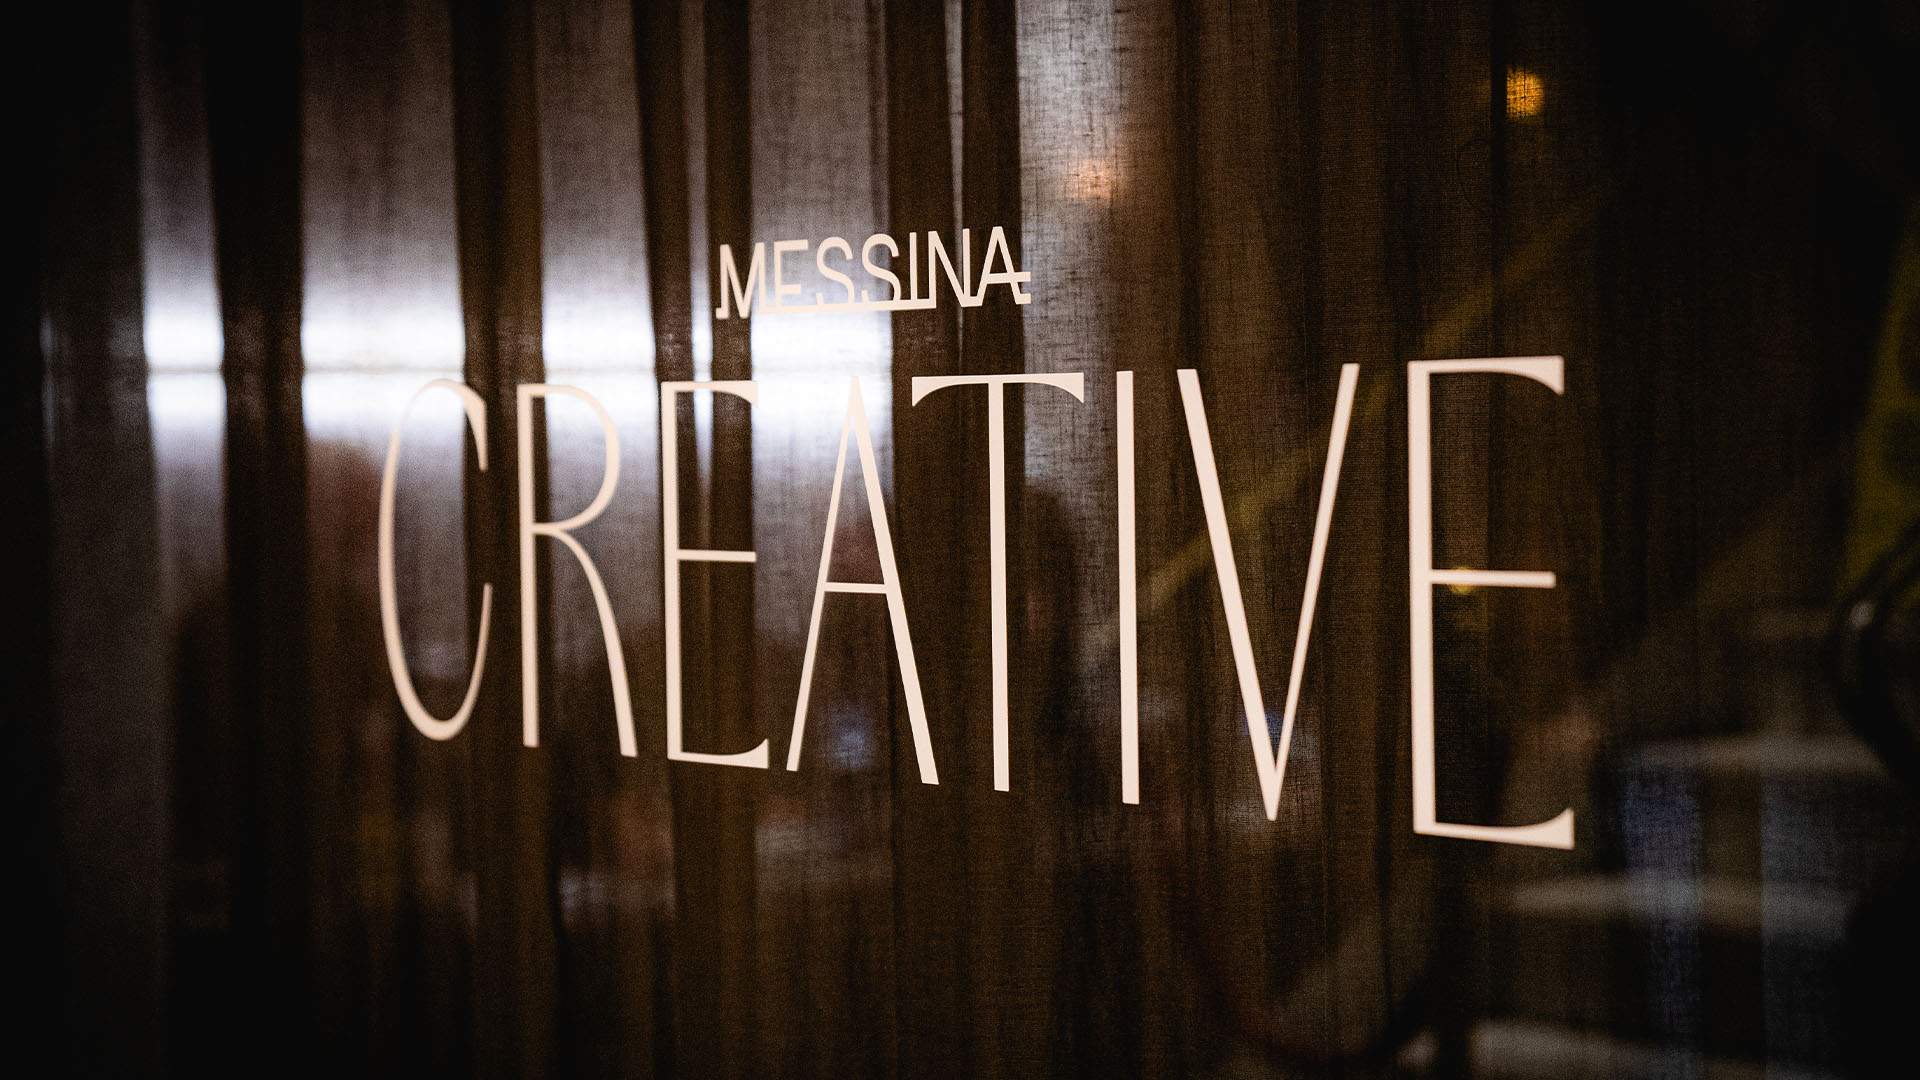 Messina Creative